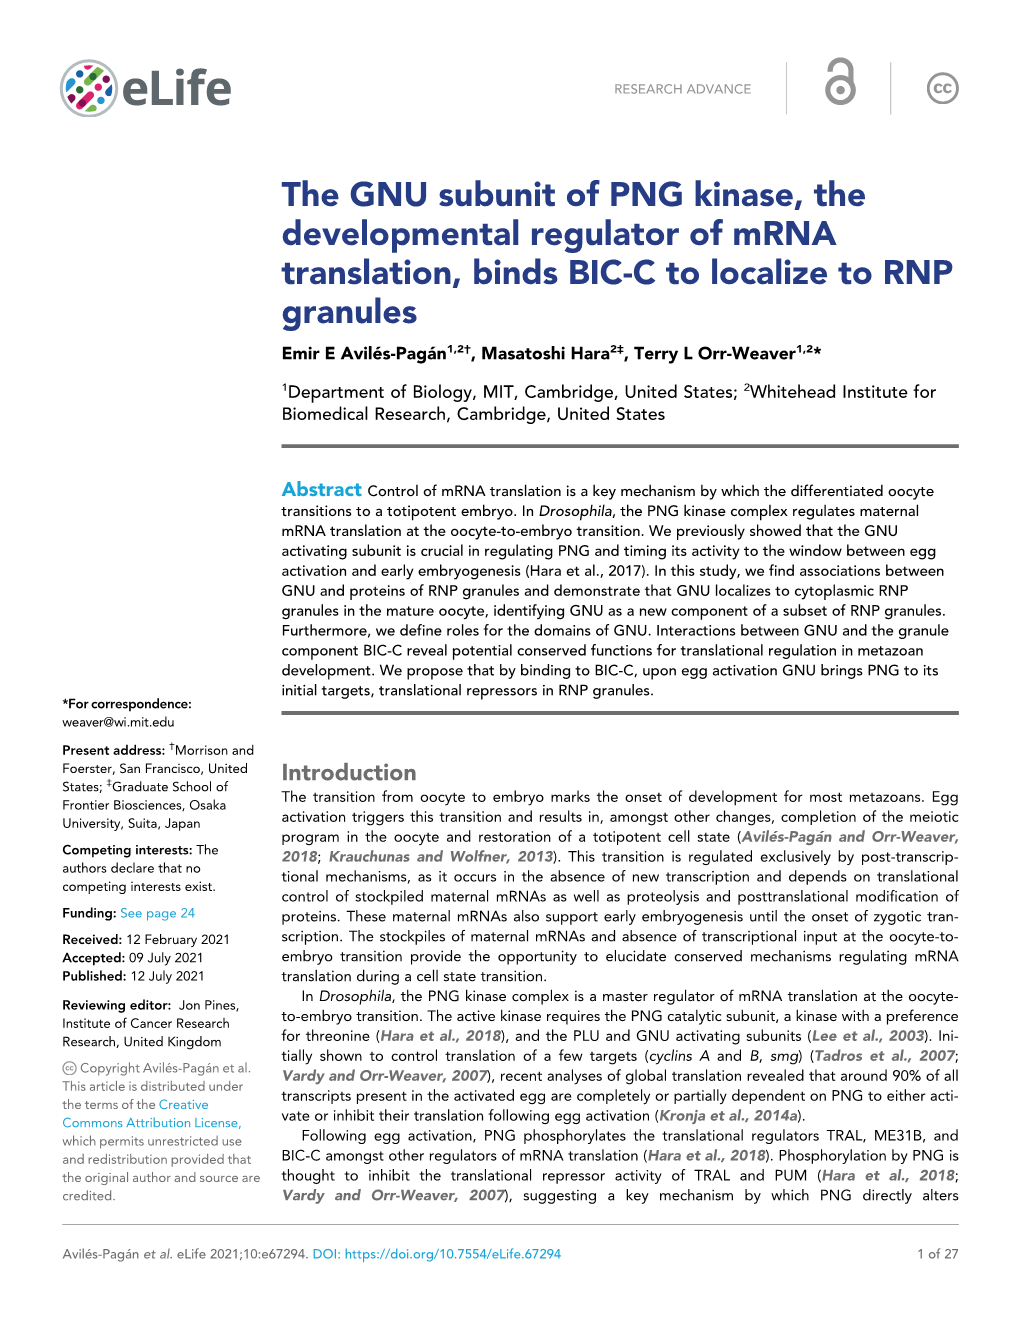 The GNU Subunit of PNG Kinase, the Developmental Regulator of Mrna